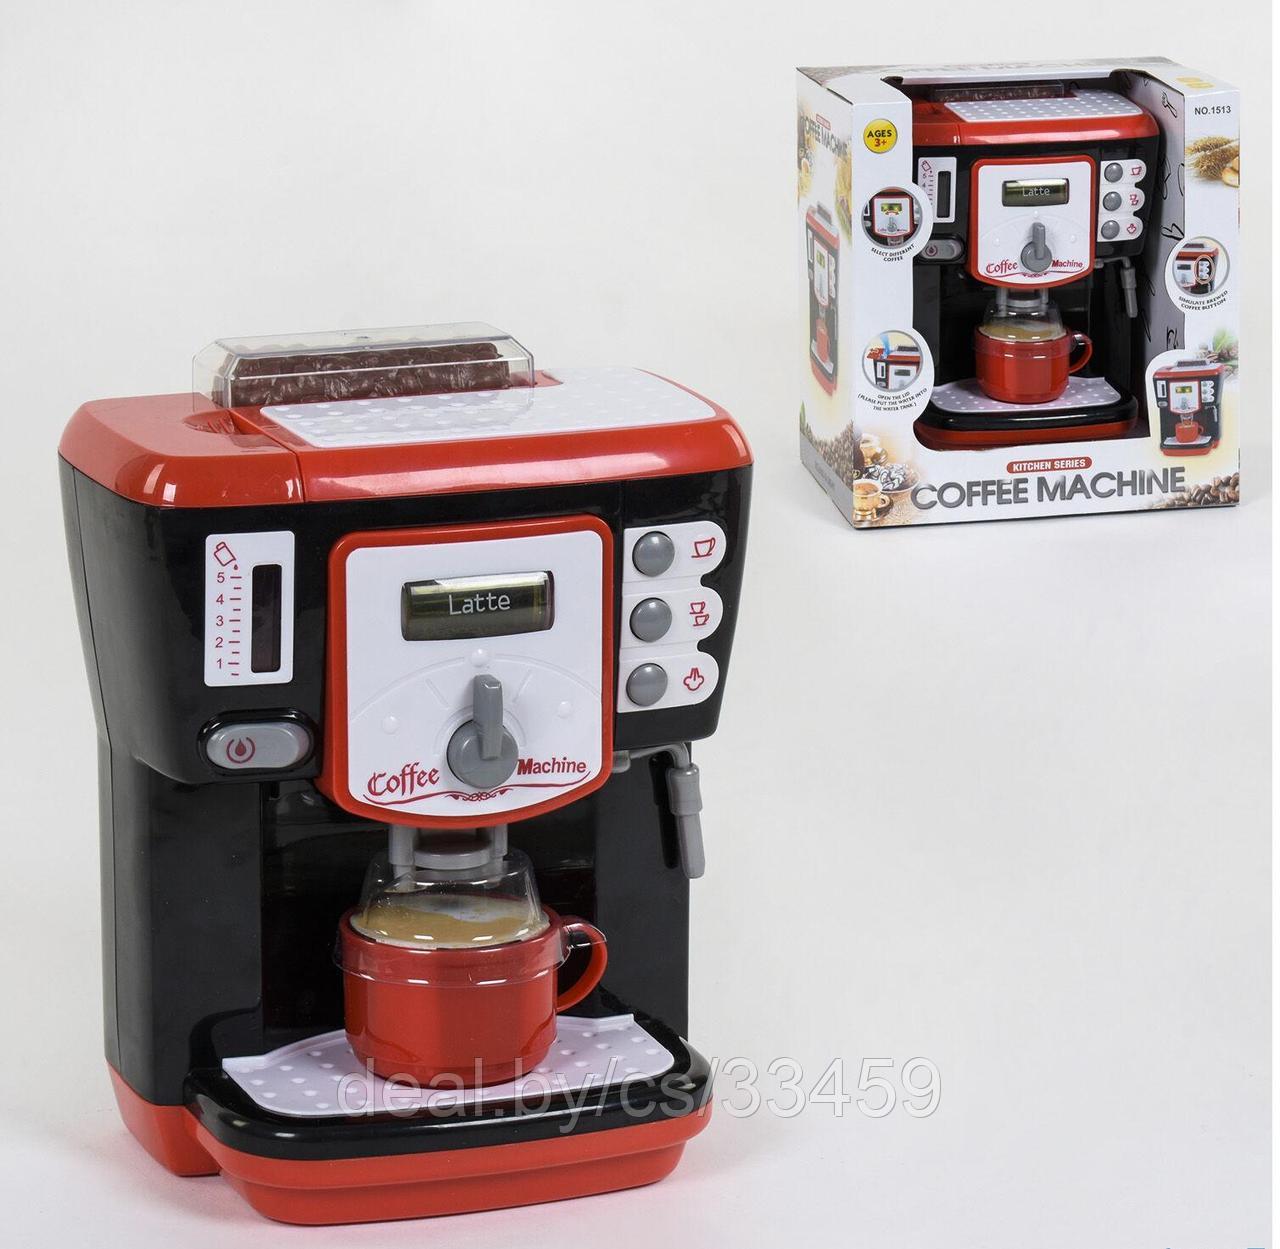 Кофемашина игрушечная Coffee machine Звук , Свет, фото 1